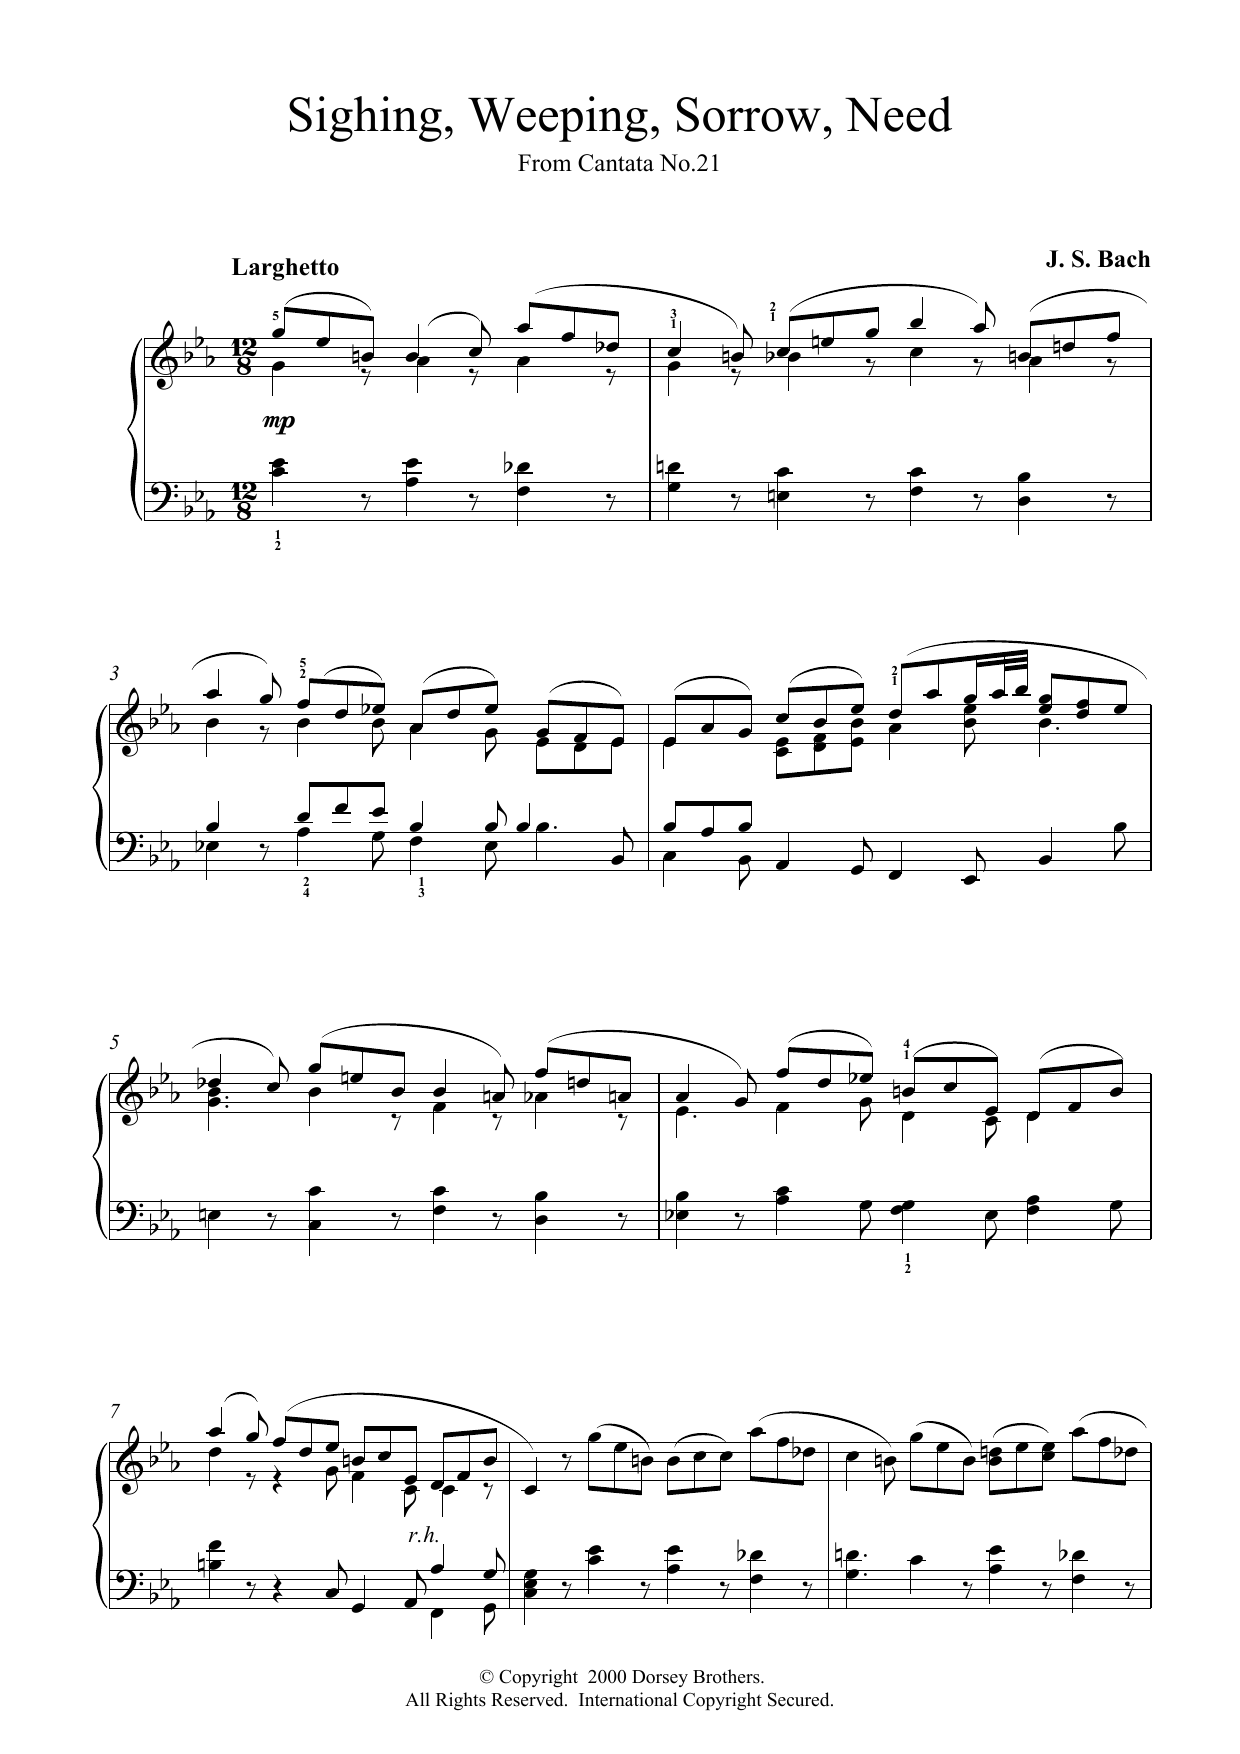 Johann Sebastian Bach Sighing, Weeping, Sorrow, Need Sheet Music Notes & Chords for Piano - Download or Print PDF